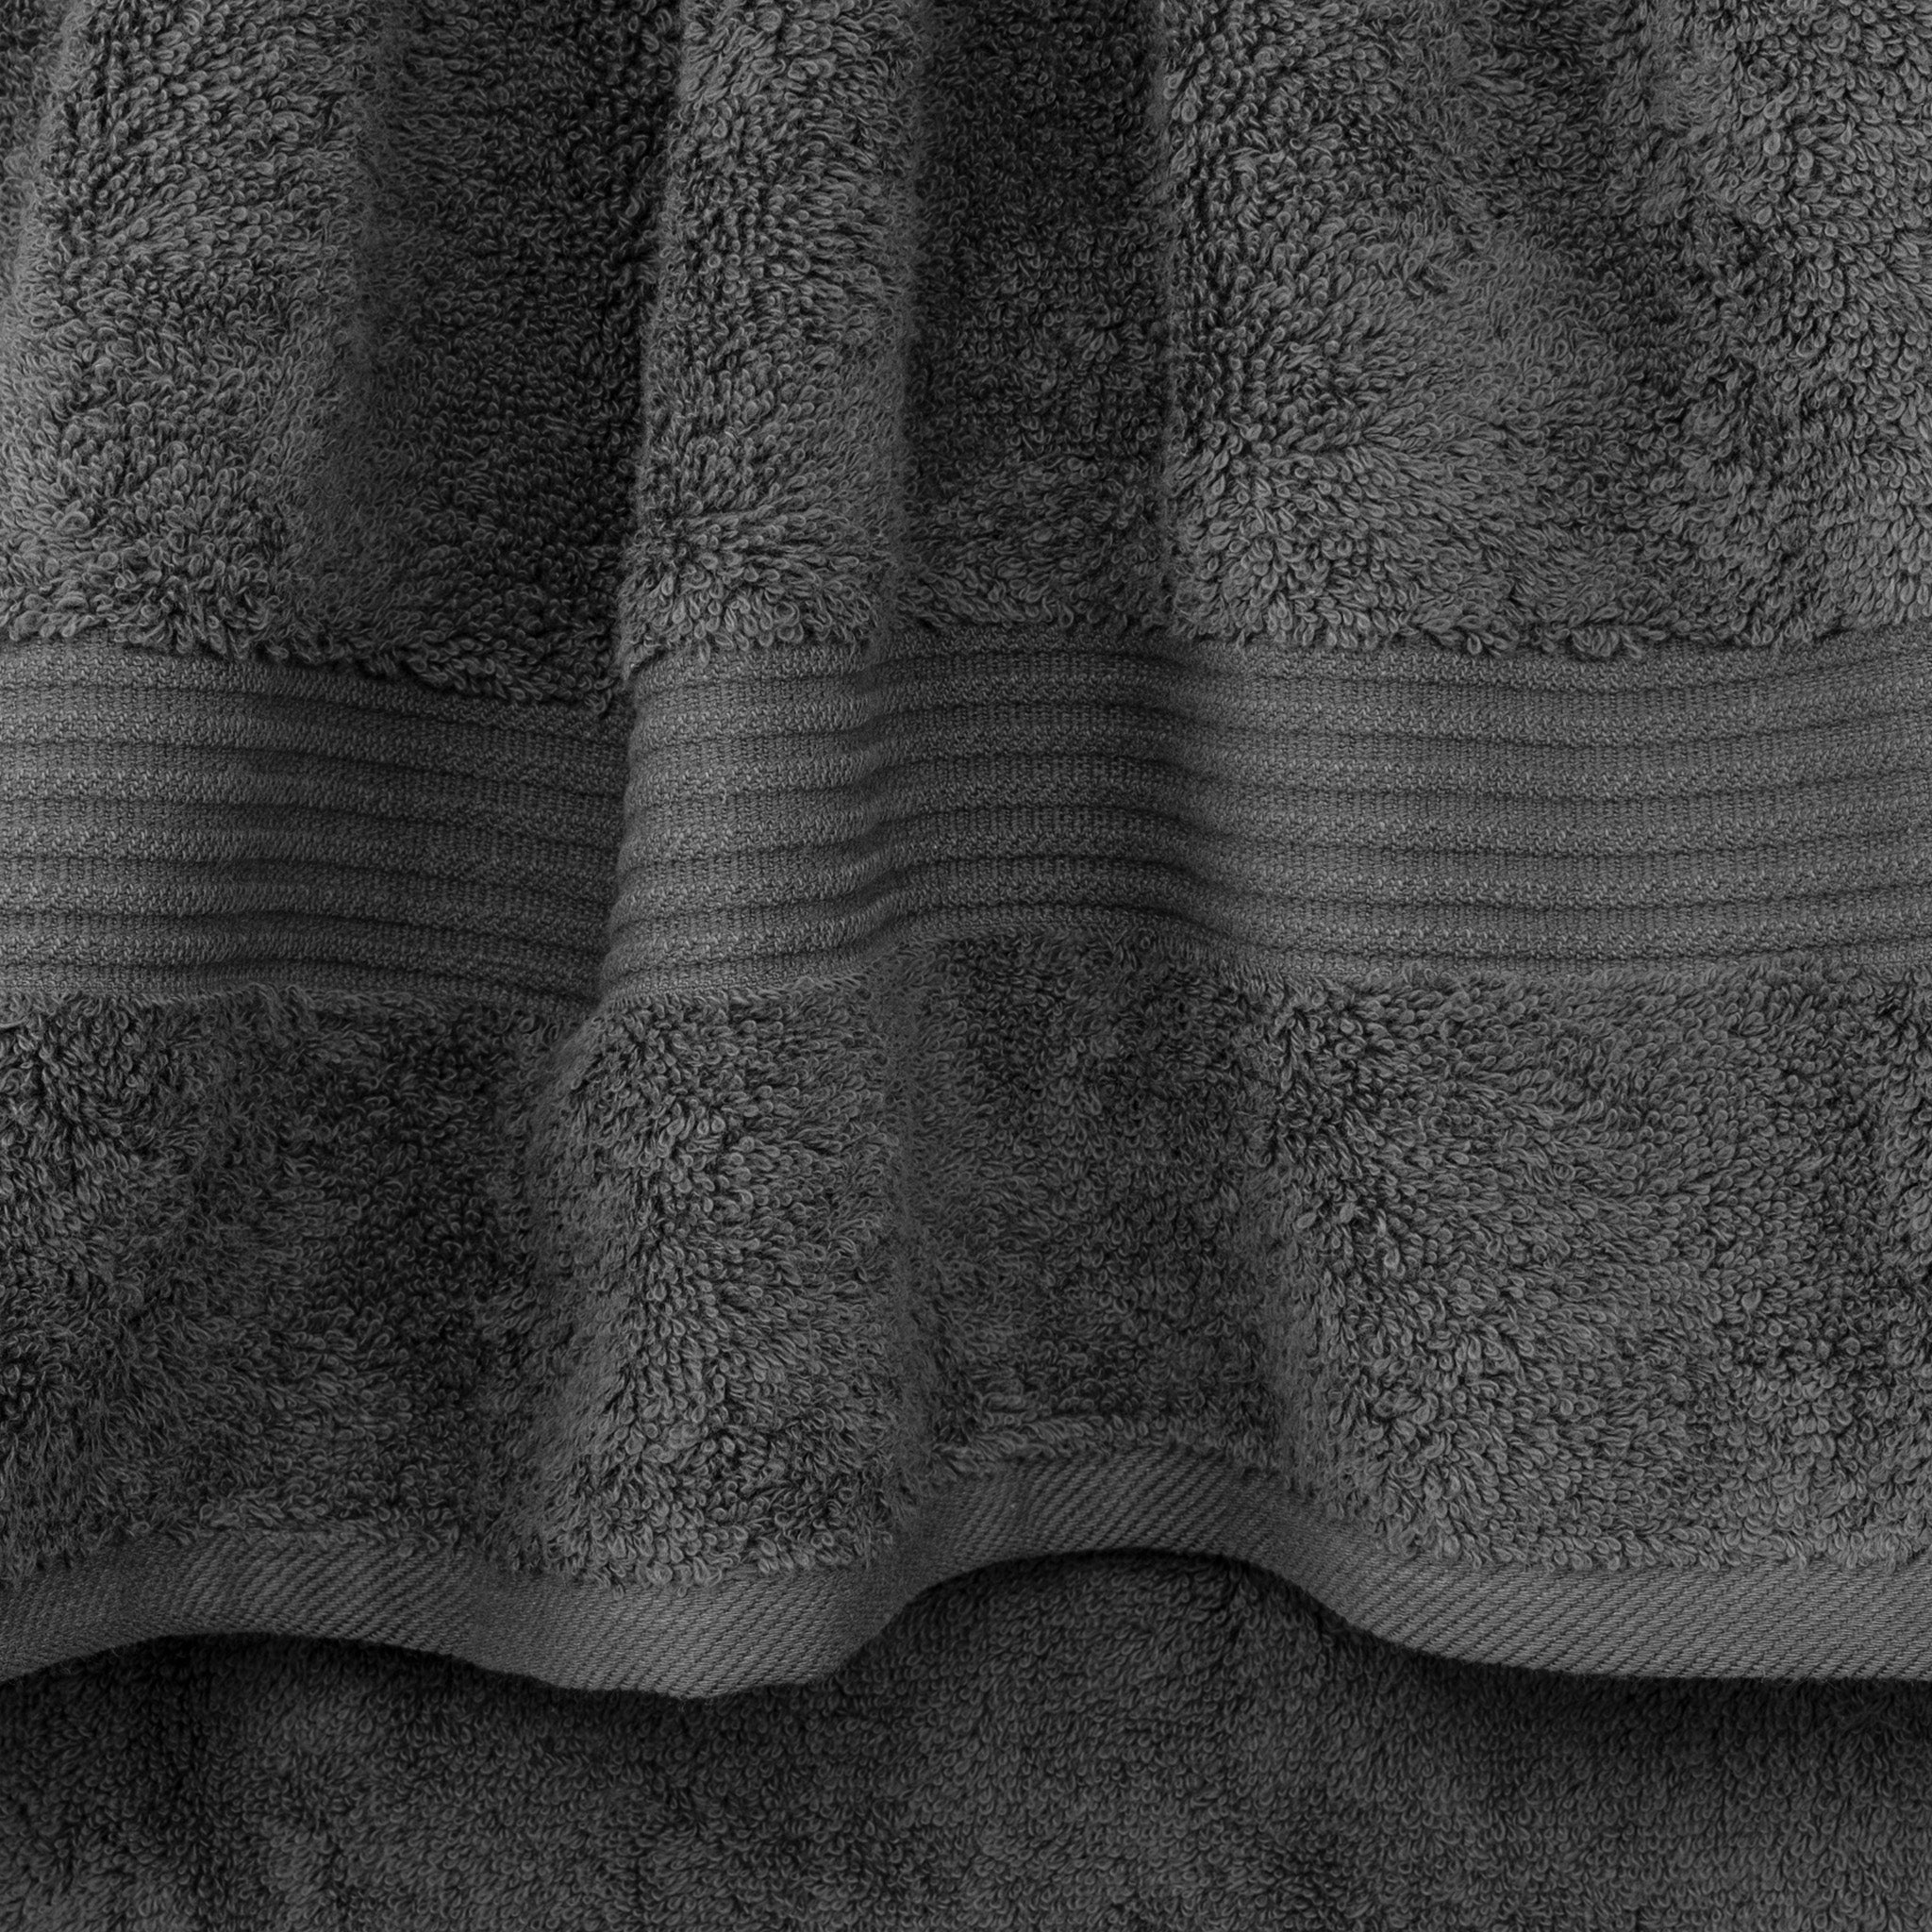 American Soft Linen Bekos 100% Cotton Turkish Towels, 4 Piece Washcloth Towel Set -gray-04